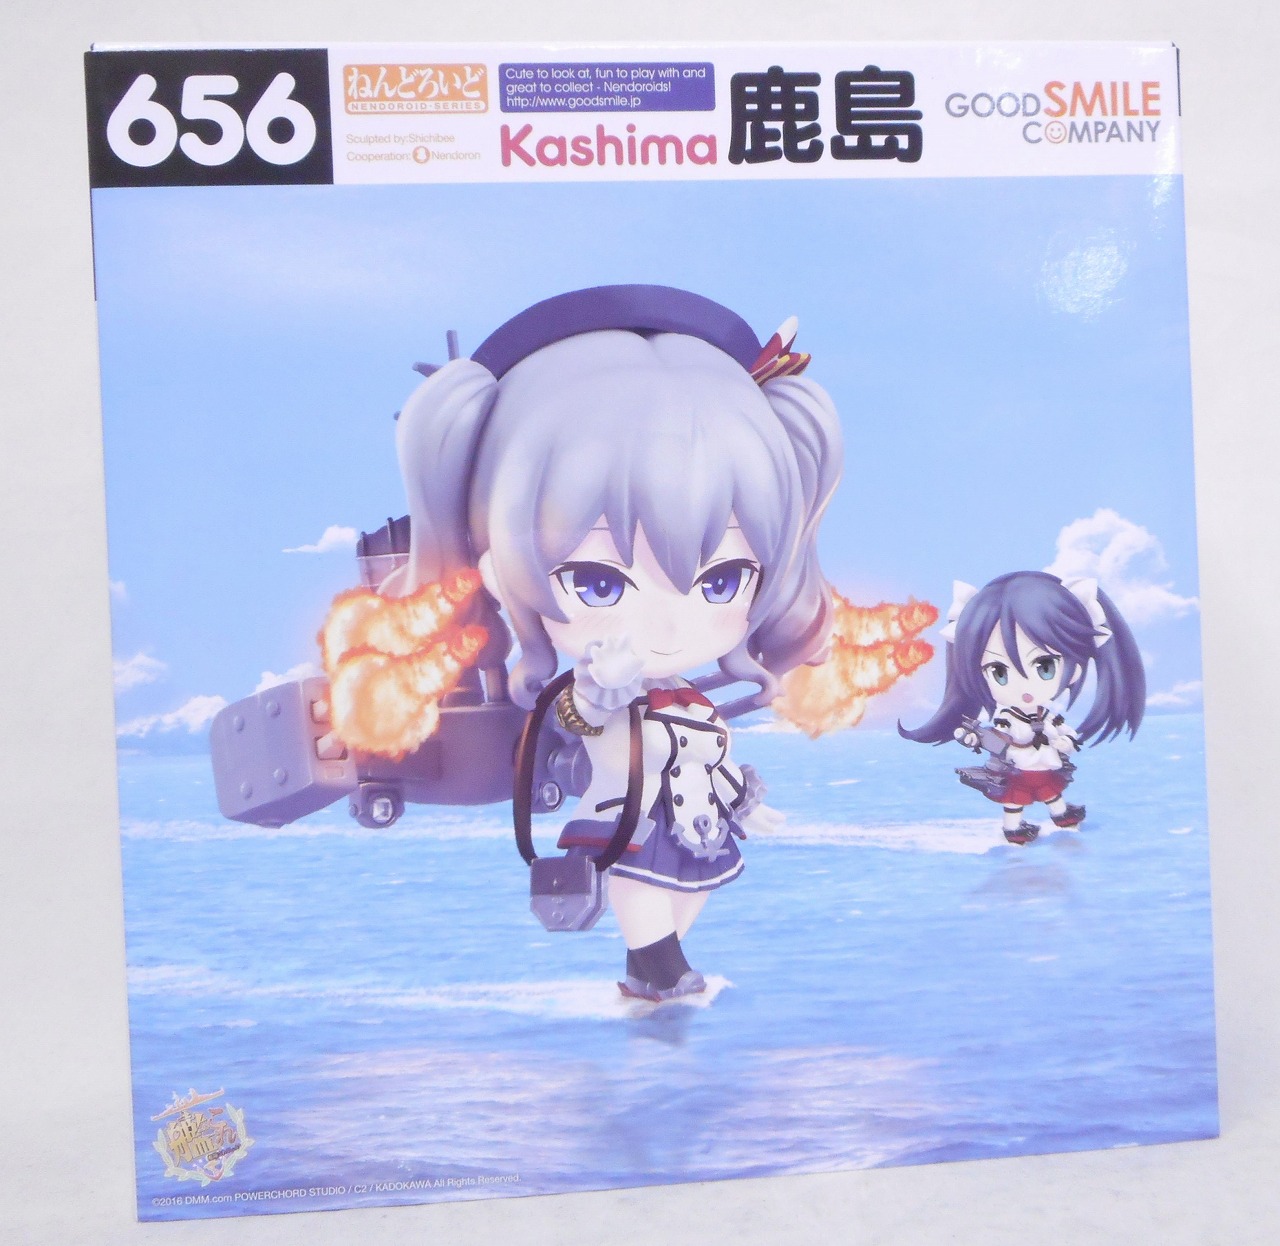 Nendoroid No.656 Kashima with Goodsmile Online Shop Bonus Item